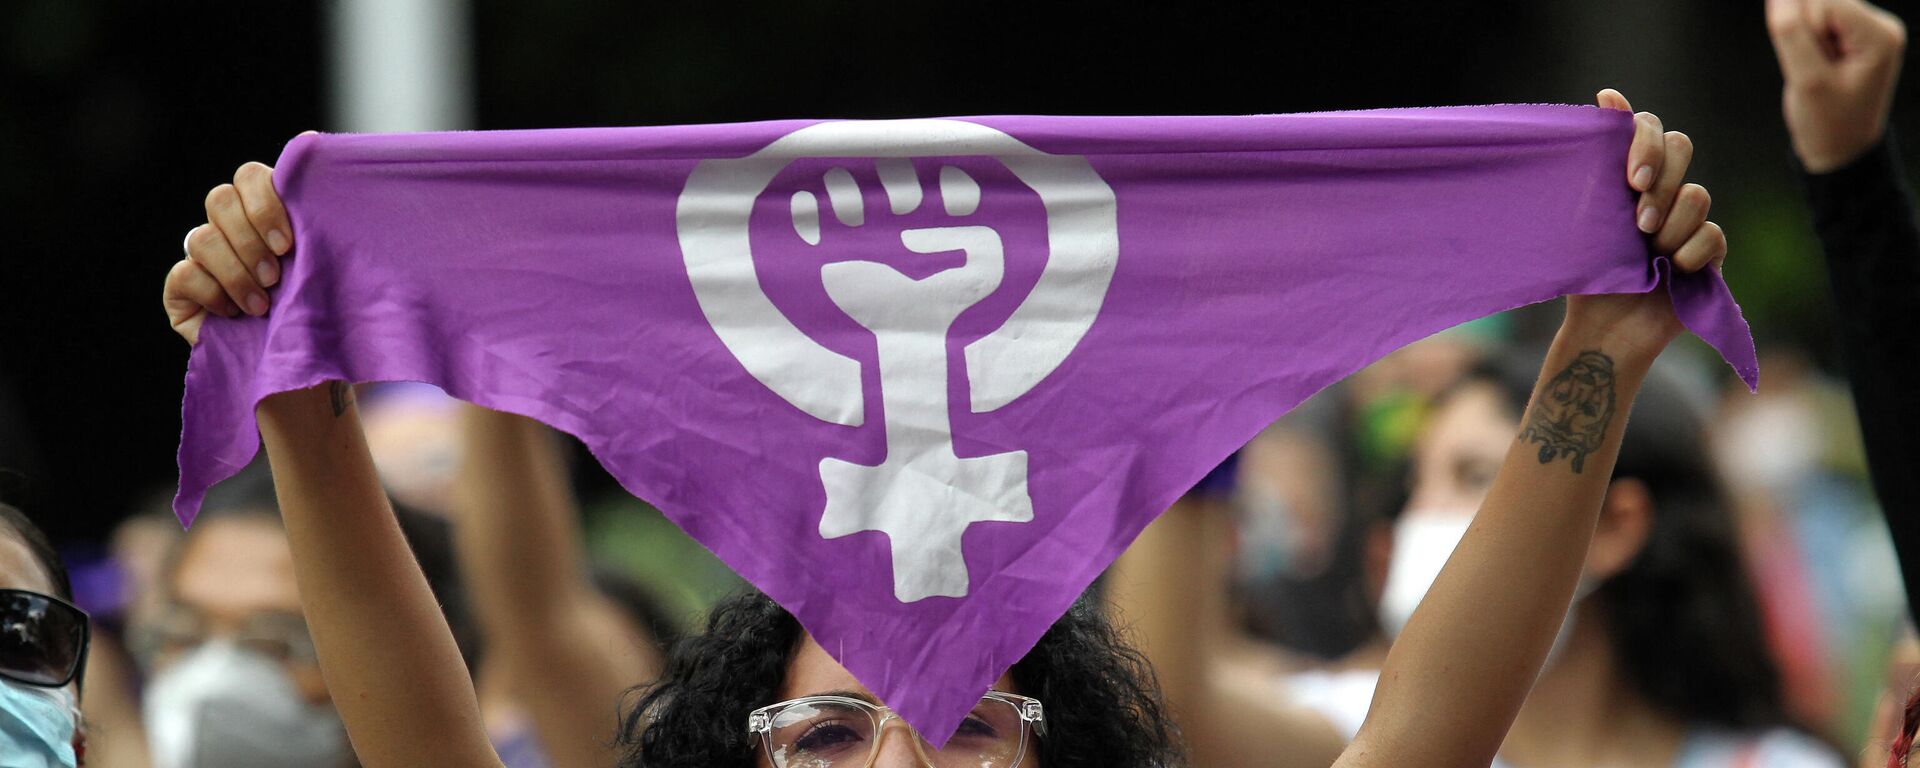 Feminista durante una protesta en Guadalajara - Sputnik Mundo, 1920, 24.11.2021